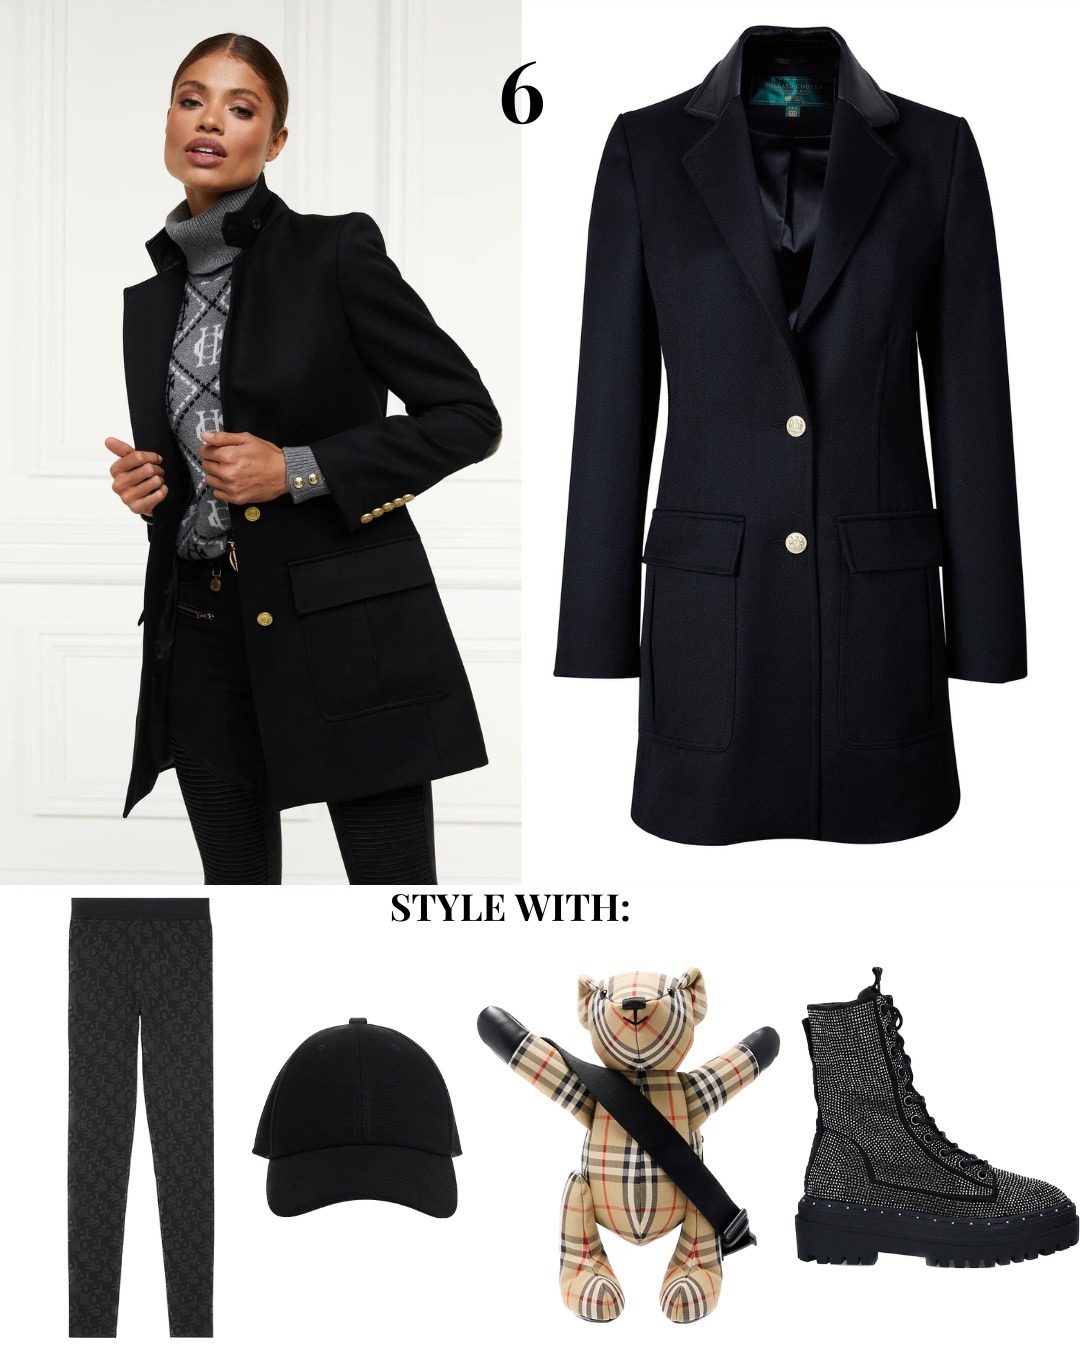 Black blazer outfit idea for women.